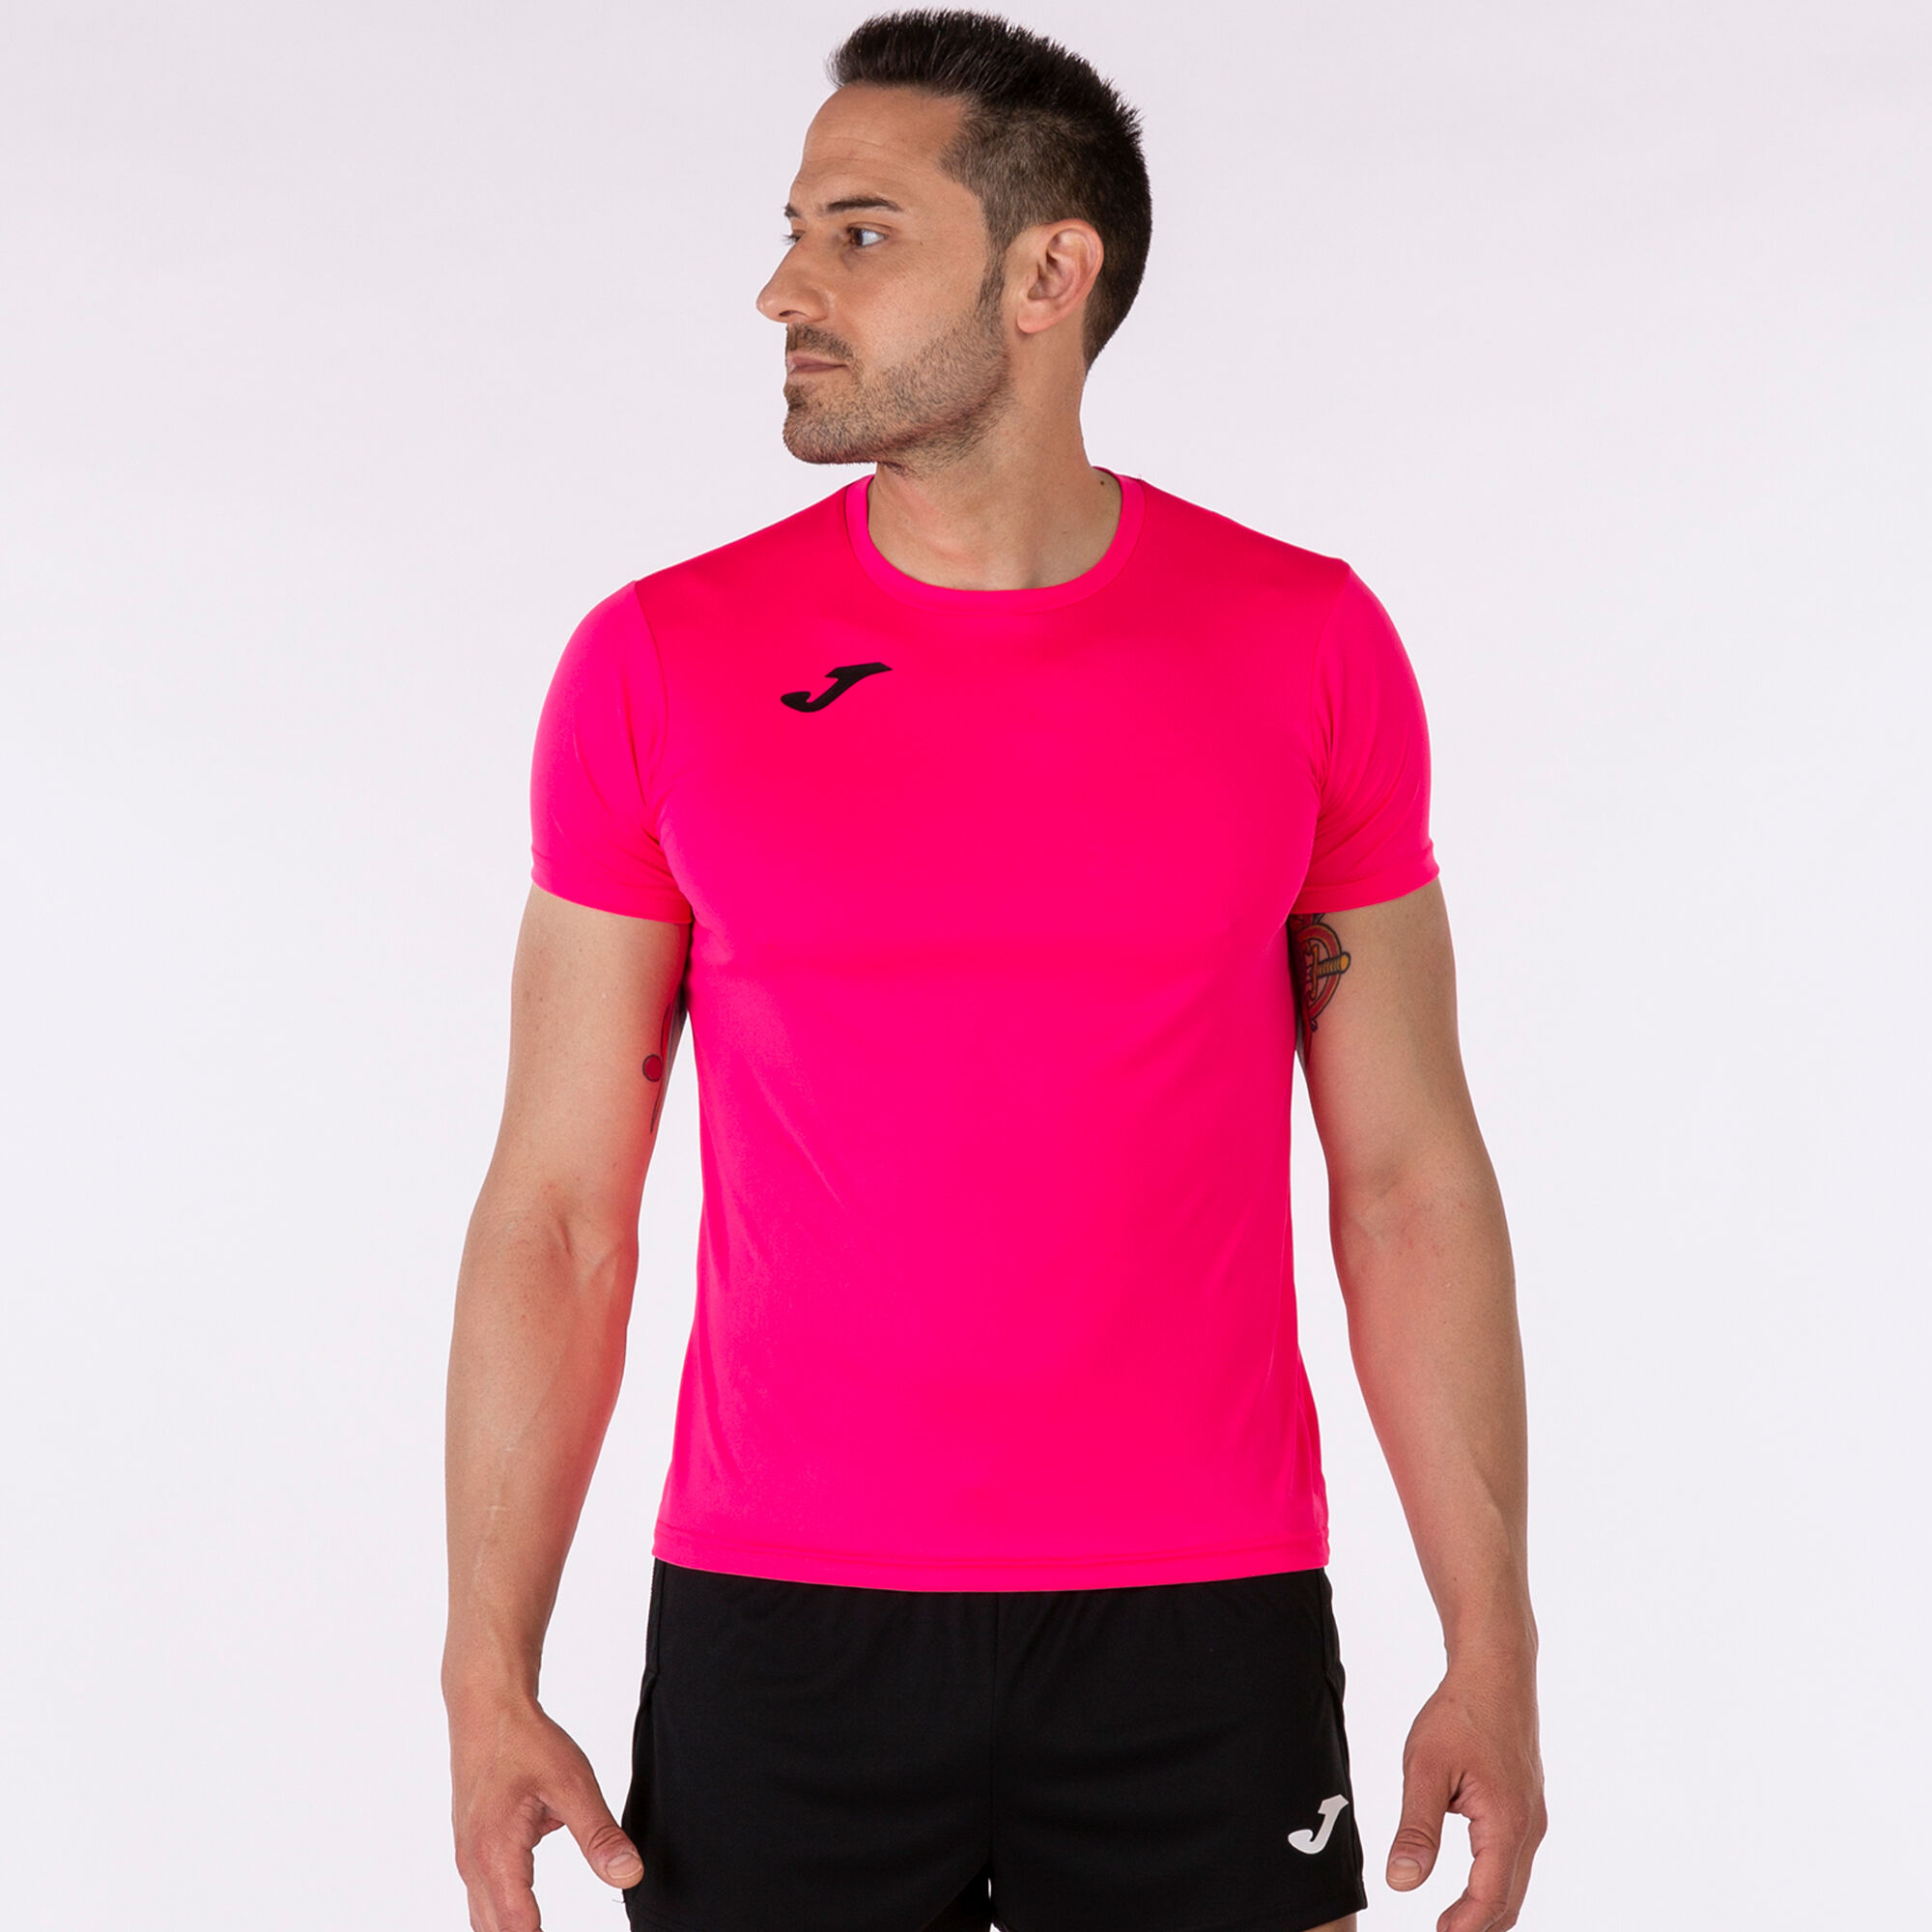 Camiseta manga corta hombre Record II rosa flúor